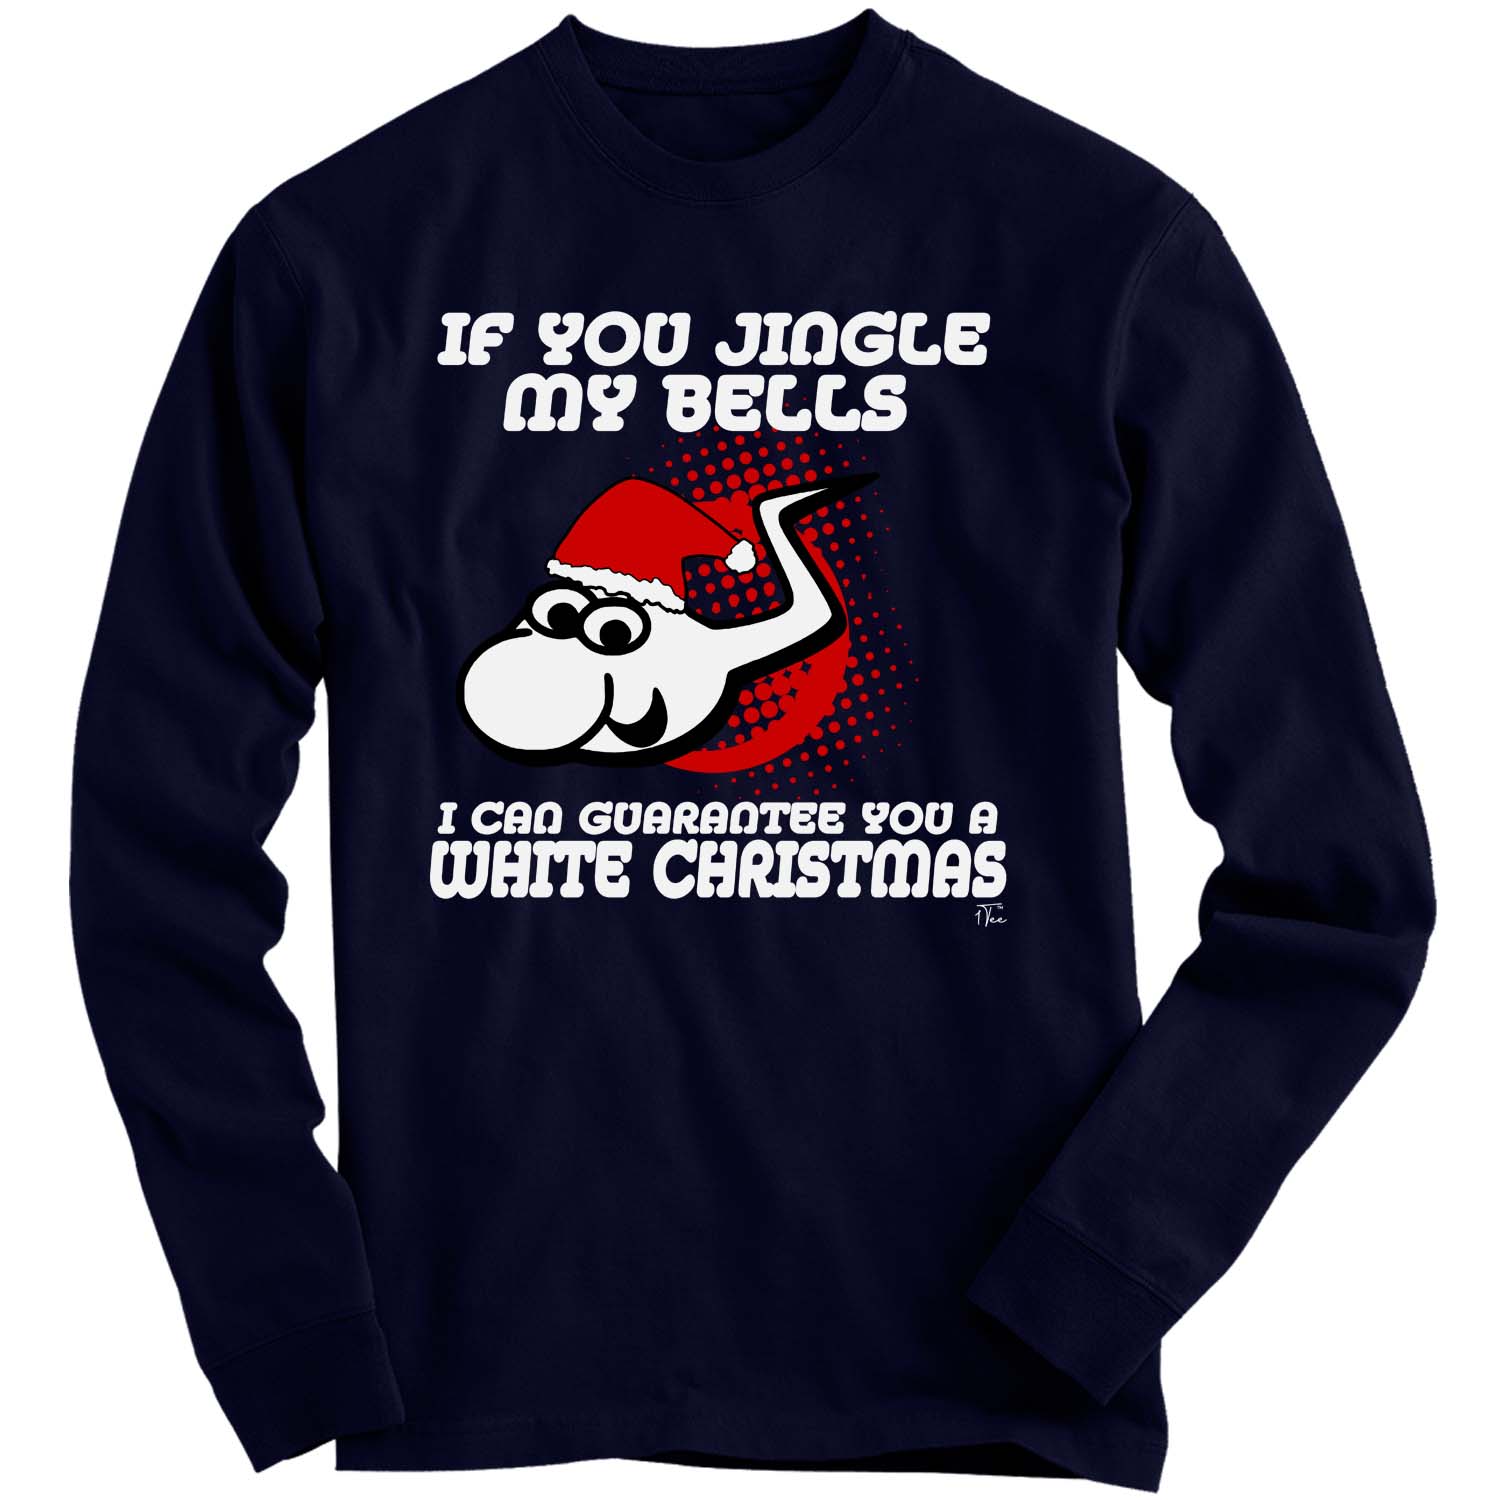 Christmas Jingle My Bells Navy Adult T-Shirt